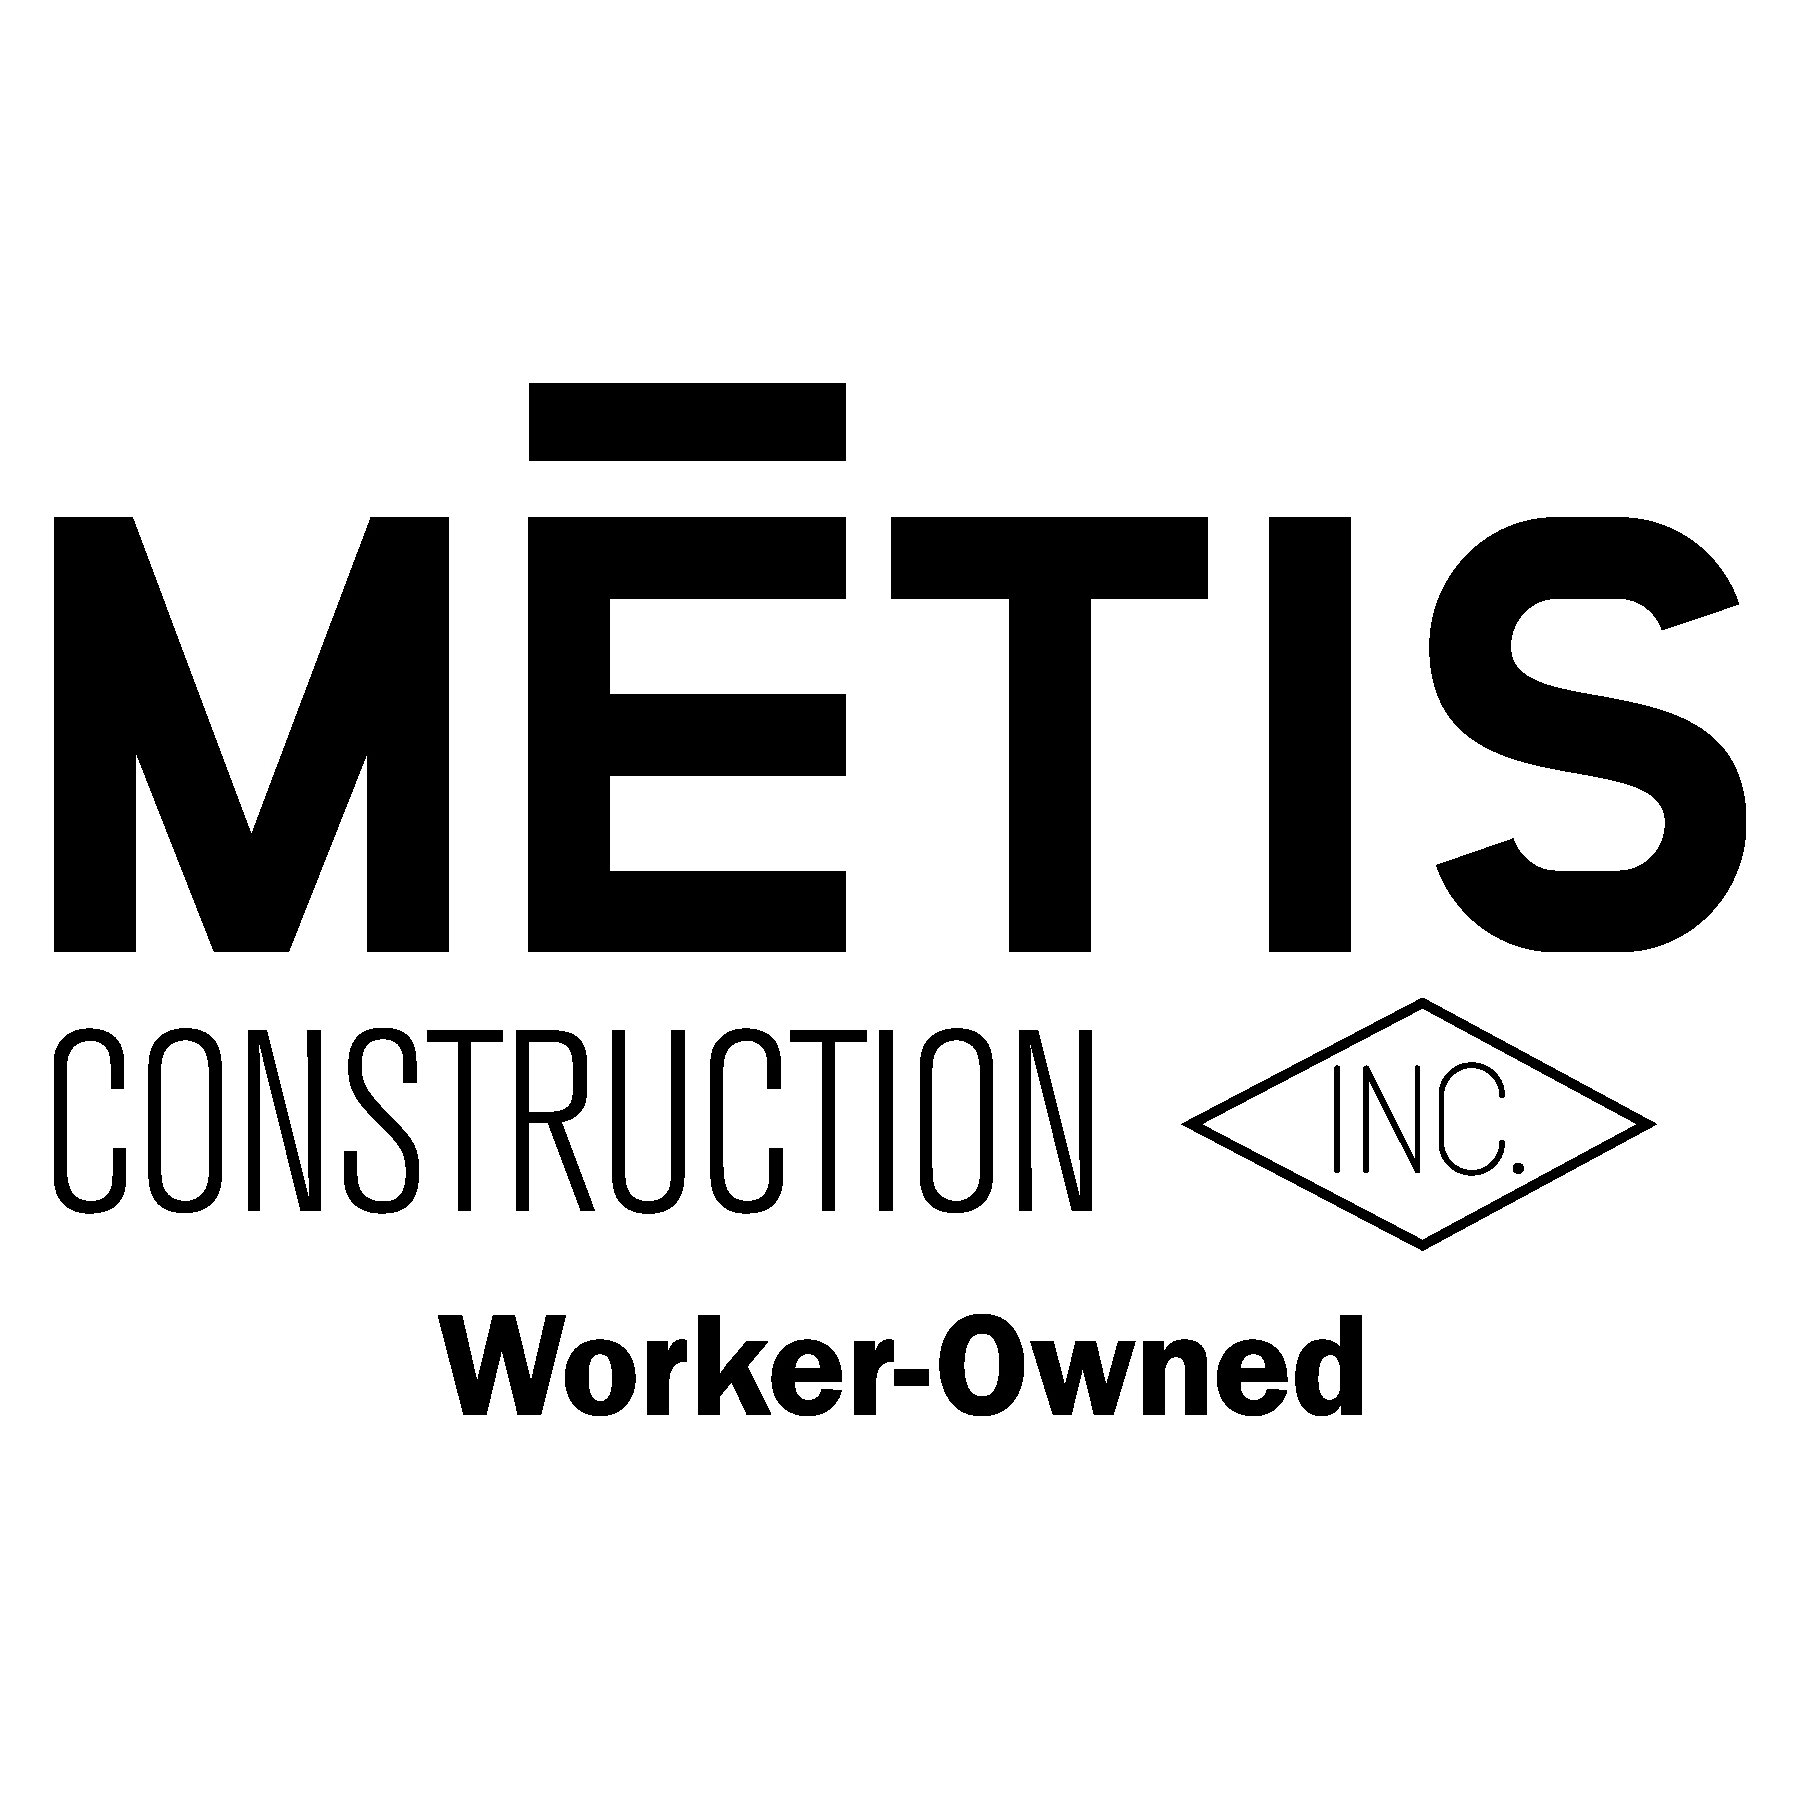 Metis Construction Inc_black.jpg